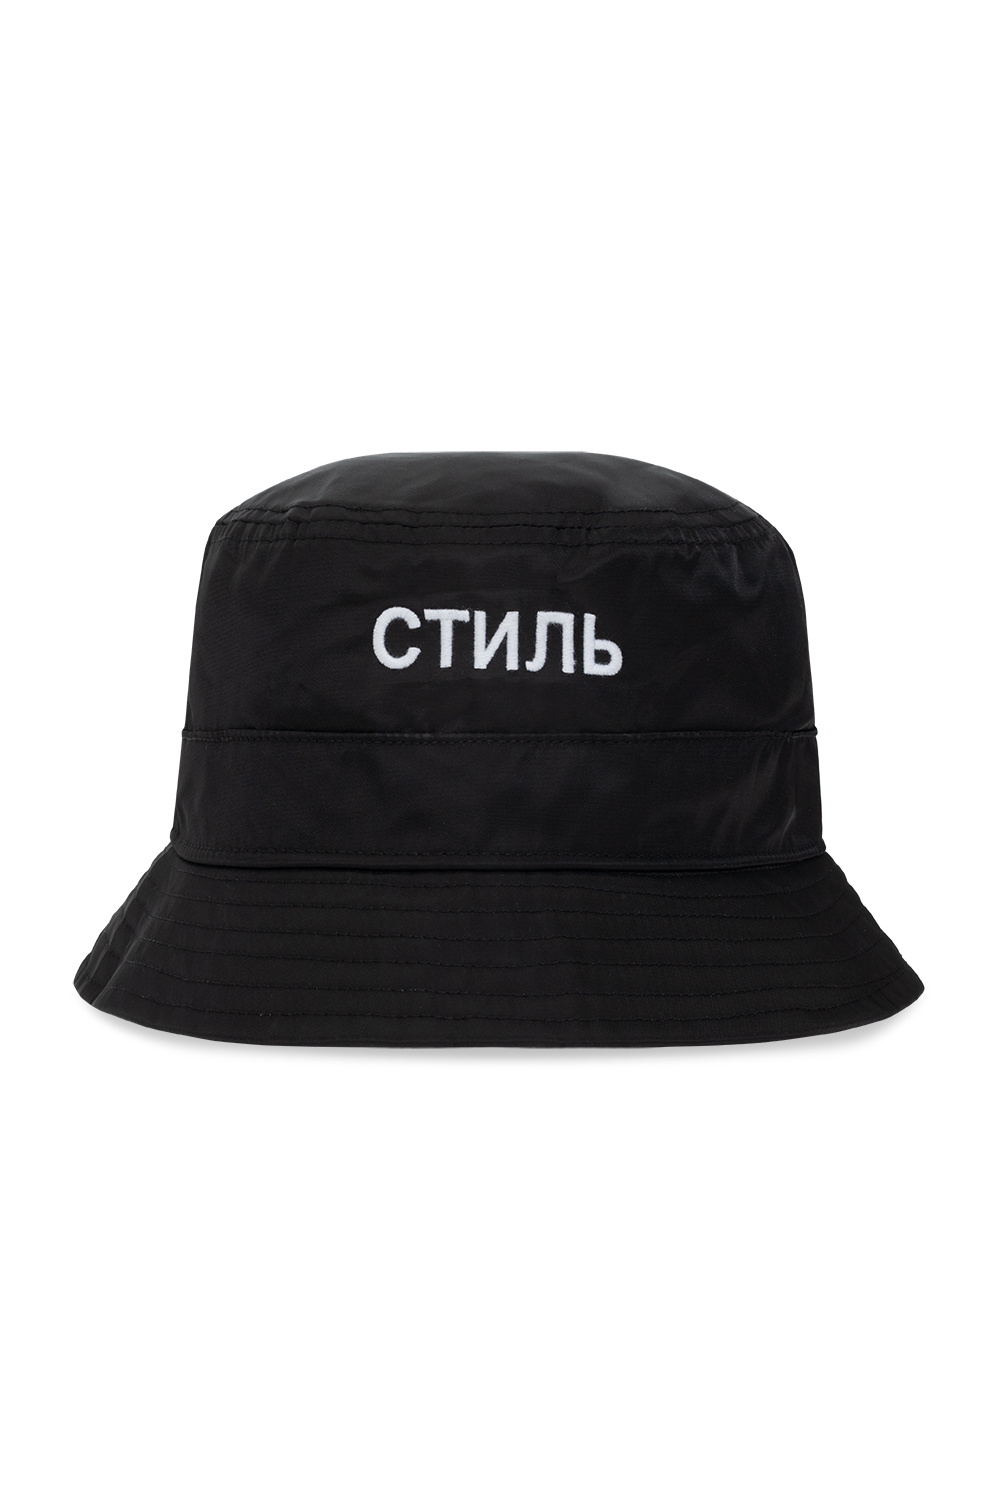 Biname-fmedShops | Lonsdale with Preston hat | | Men\'s Bucket Accessories Cap logo Heron Wigston